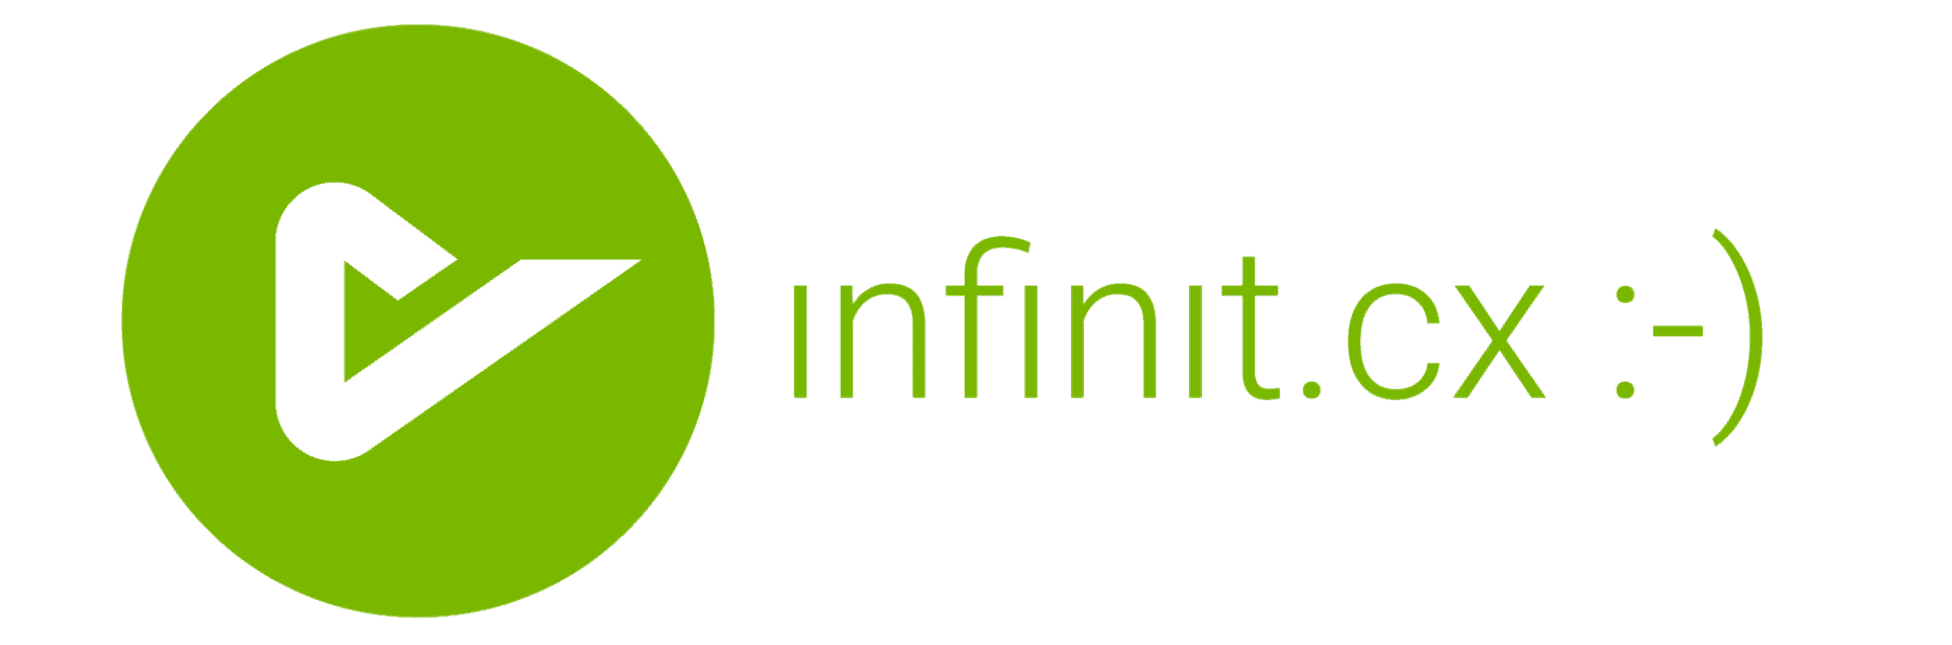 infinit.cx GmbH 